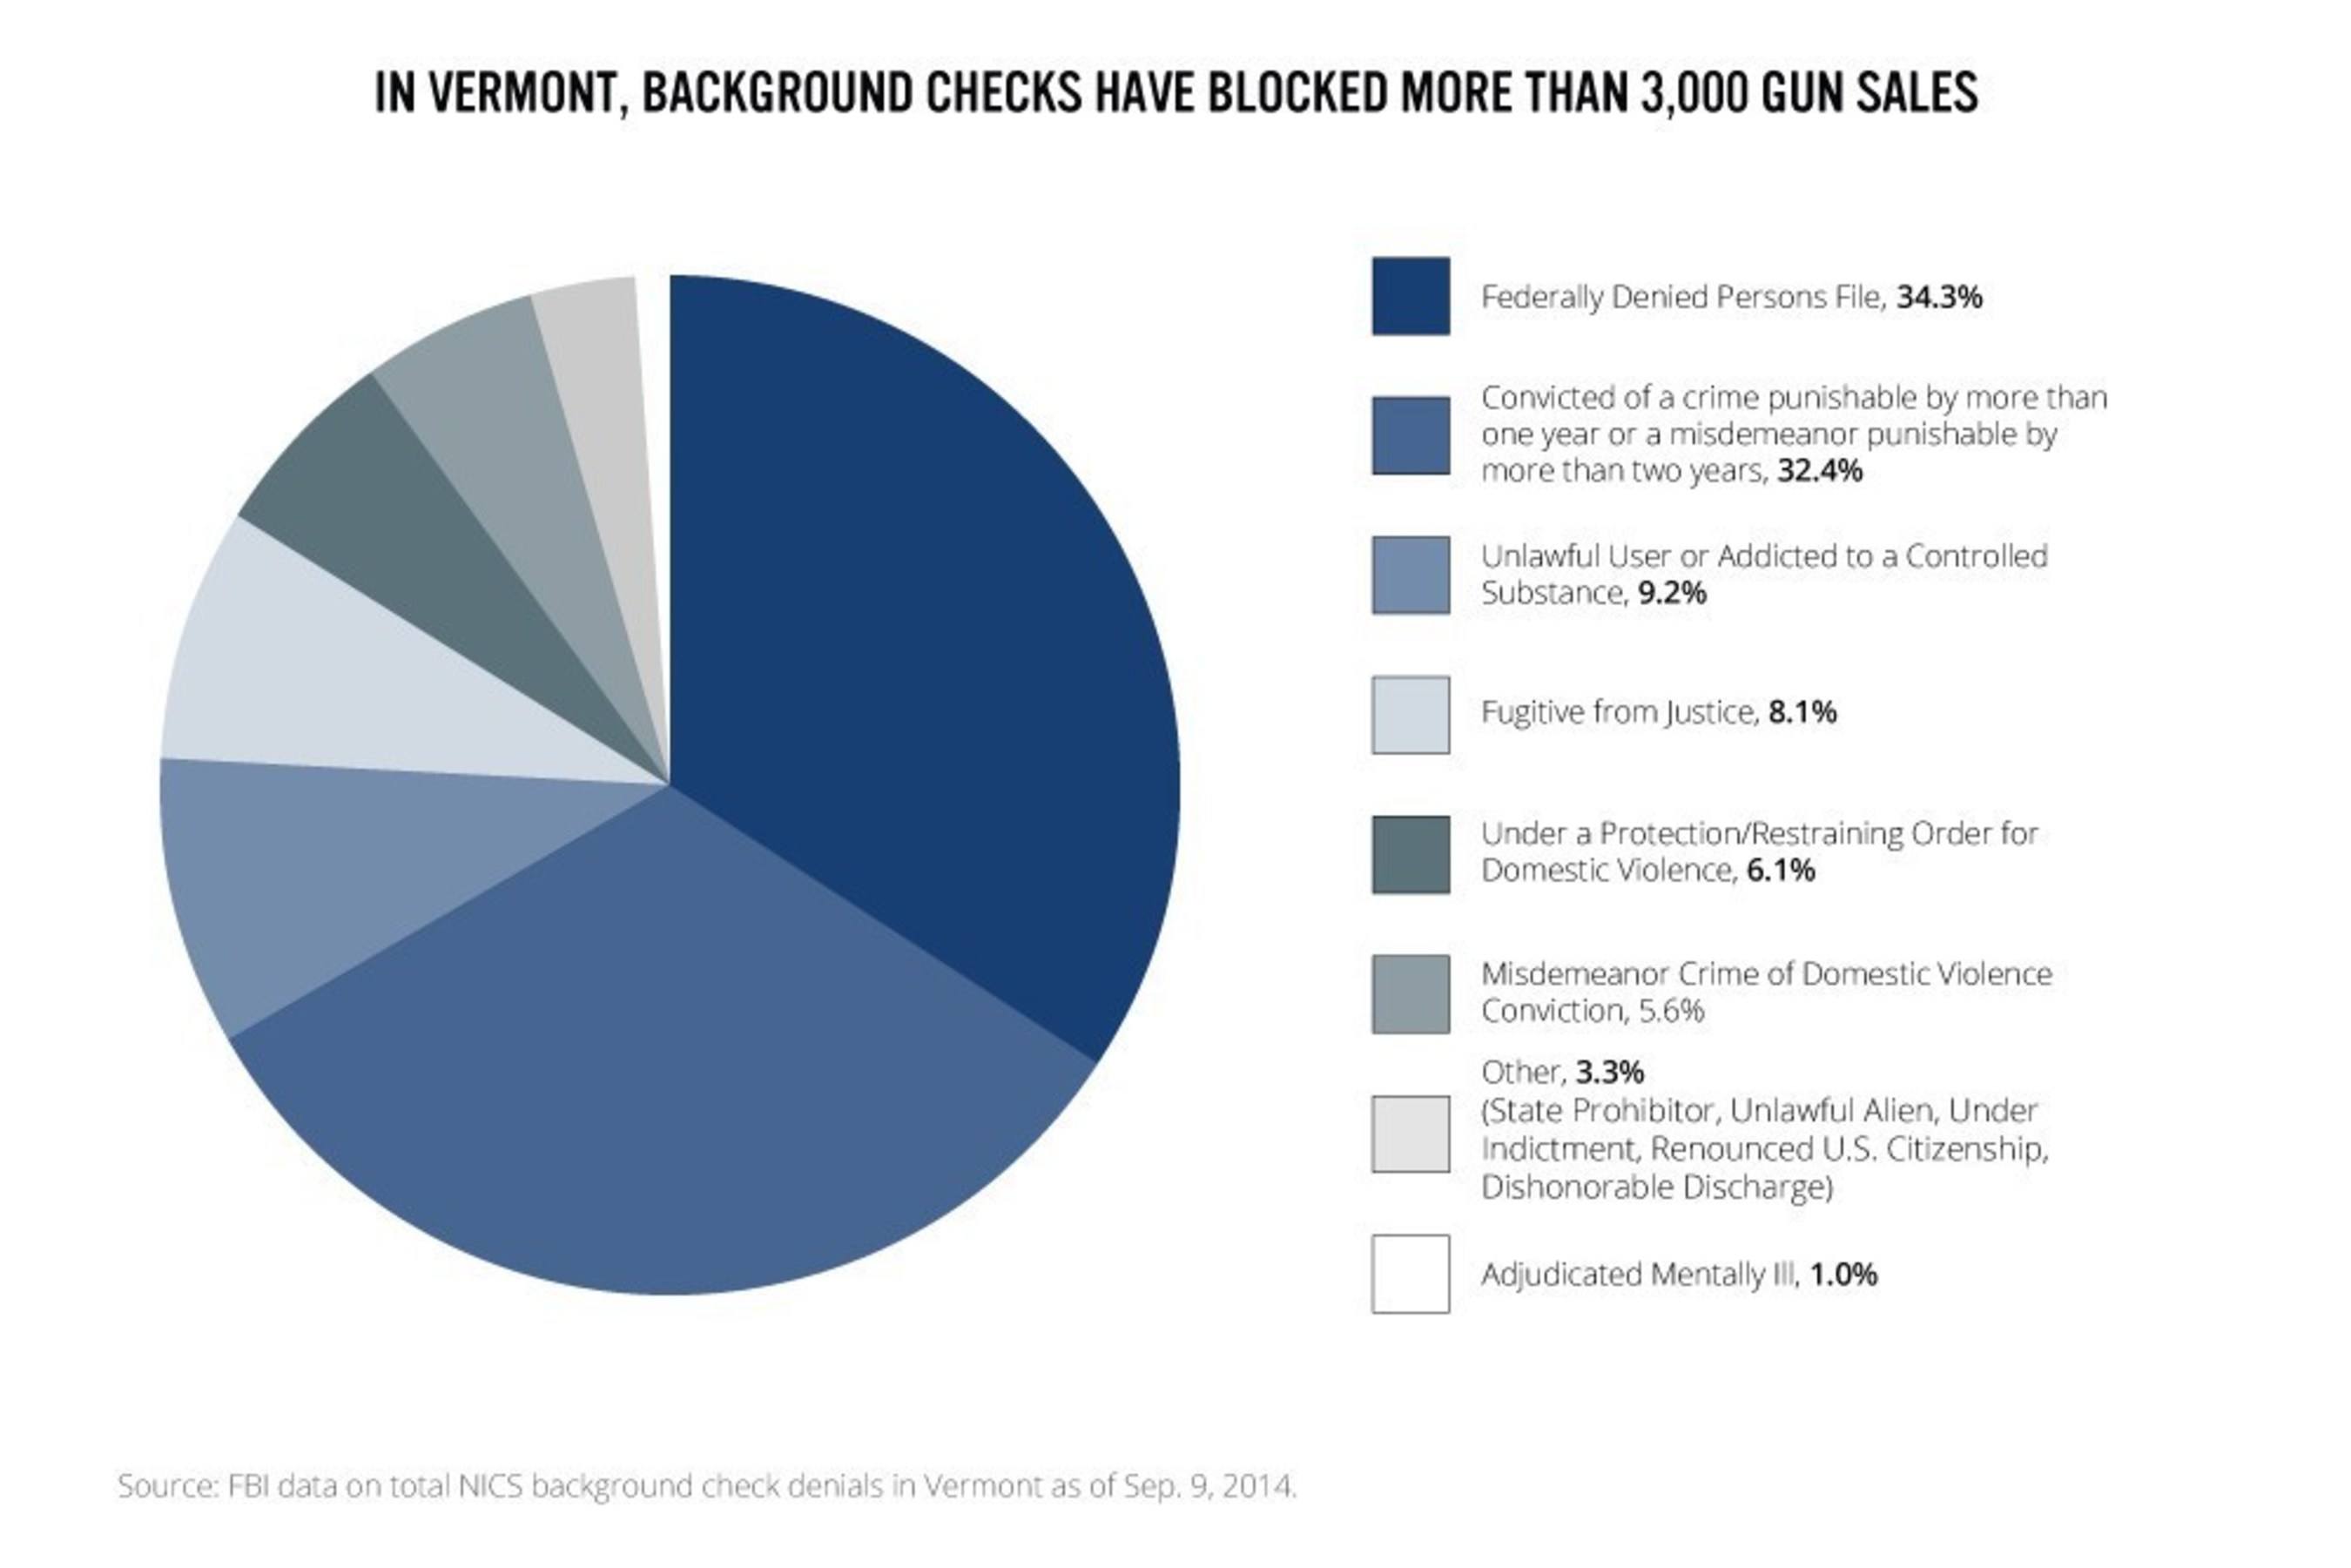 In Vermont, background checks have blocked more than 3,000 gun sales